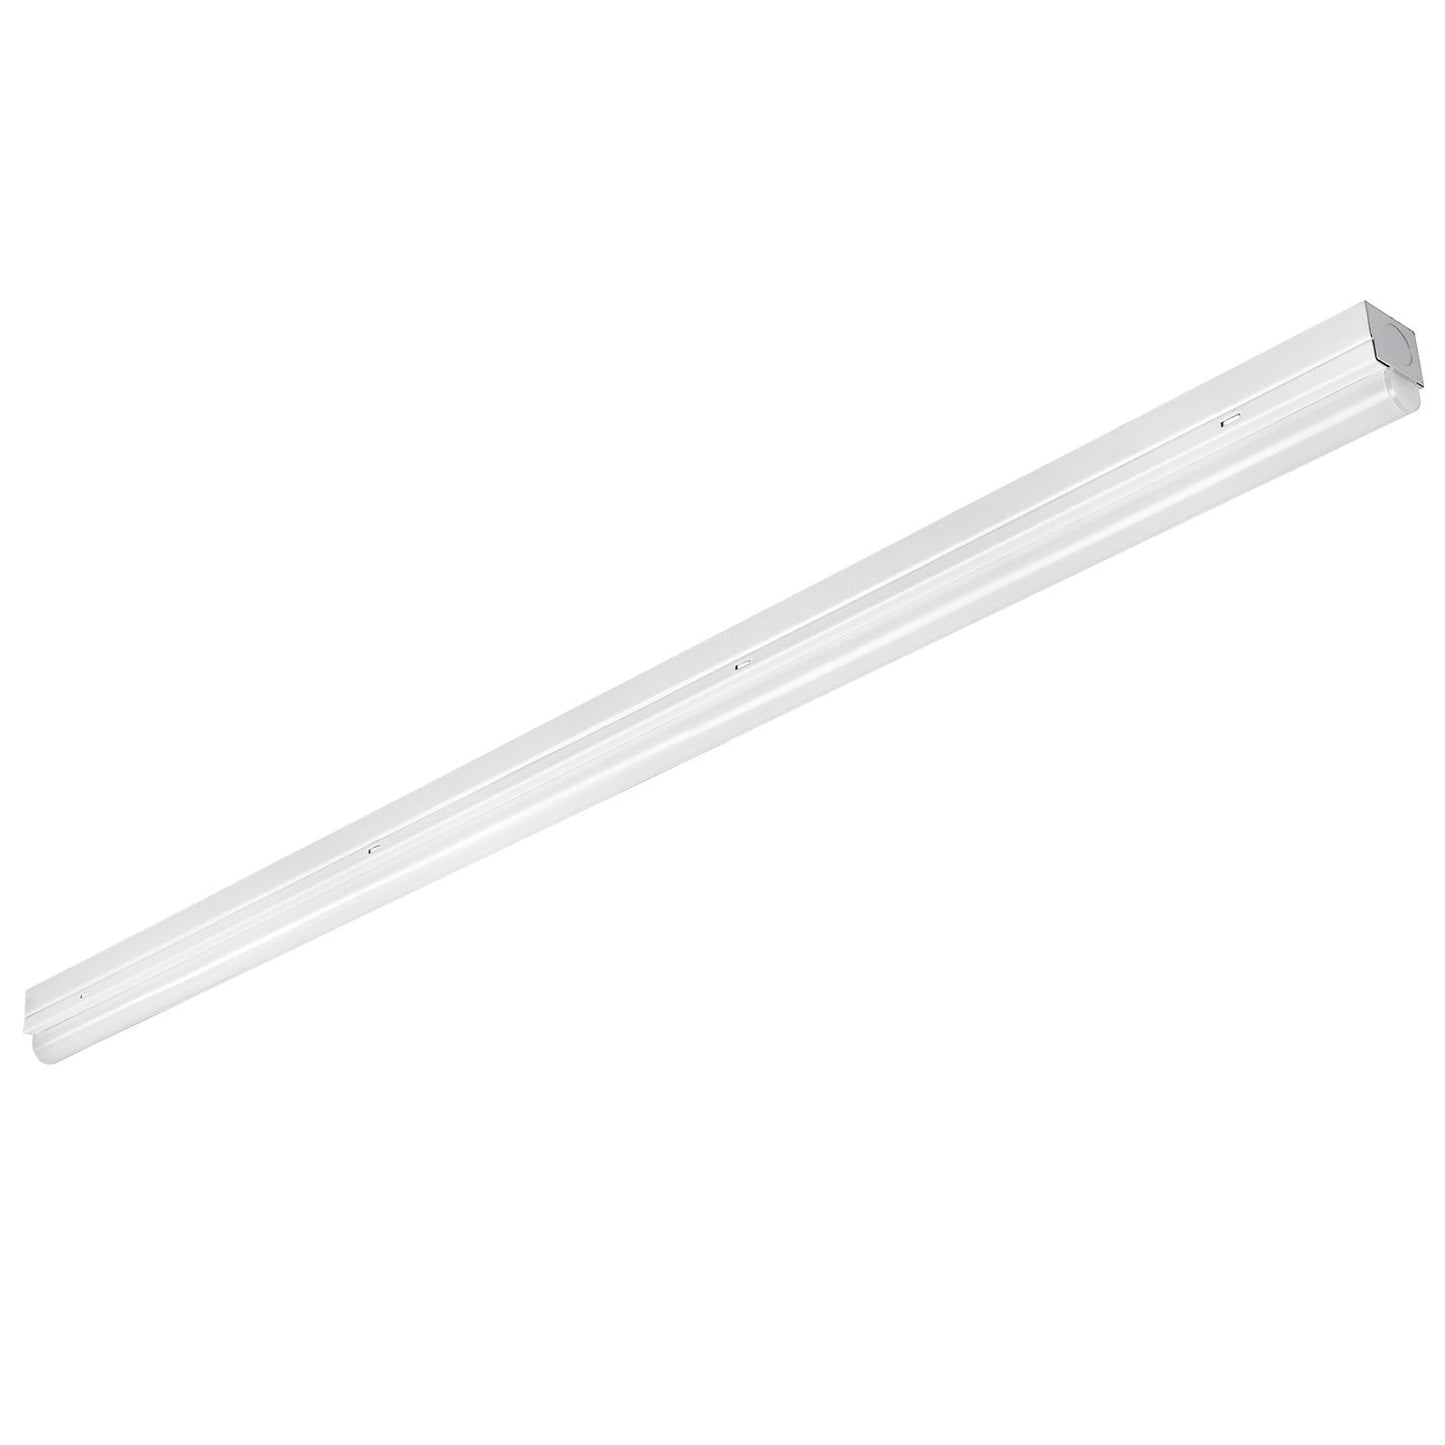 Sunlite LED 48" Linear Single Strip Fixture, 15 Watts, 5000K Super White, 2000 Lumen